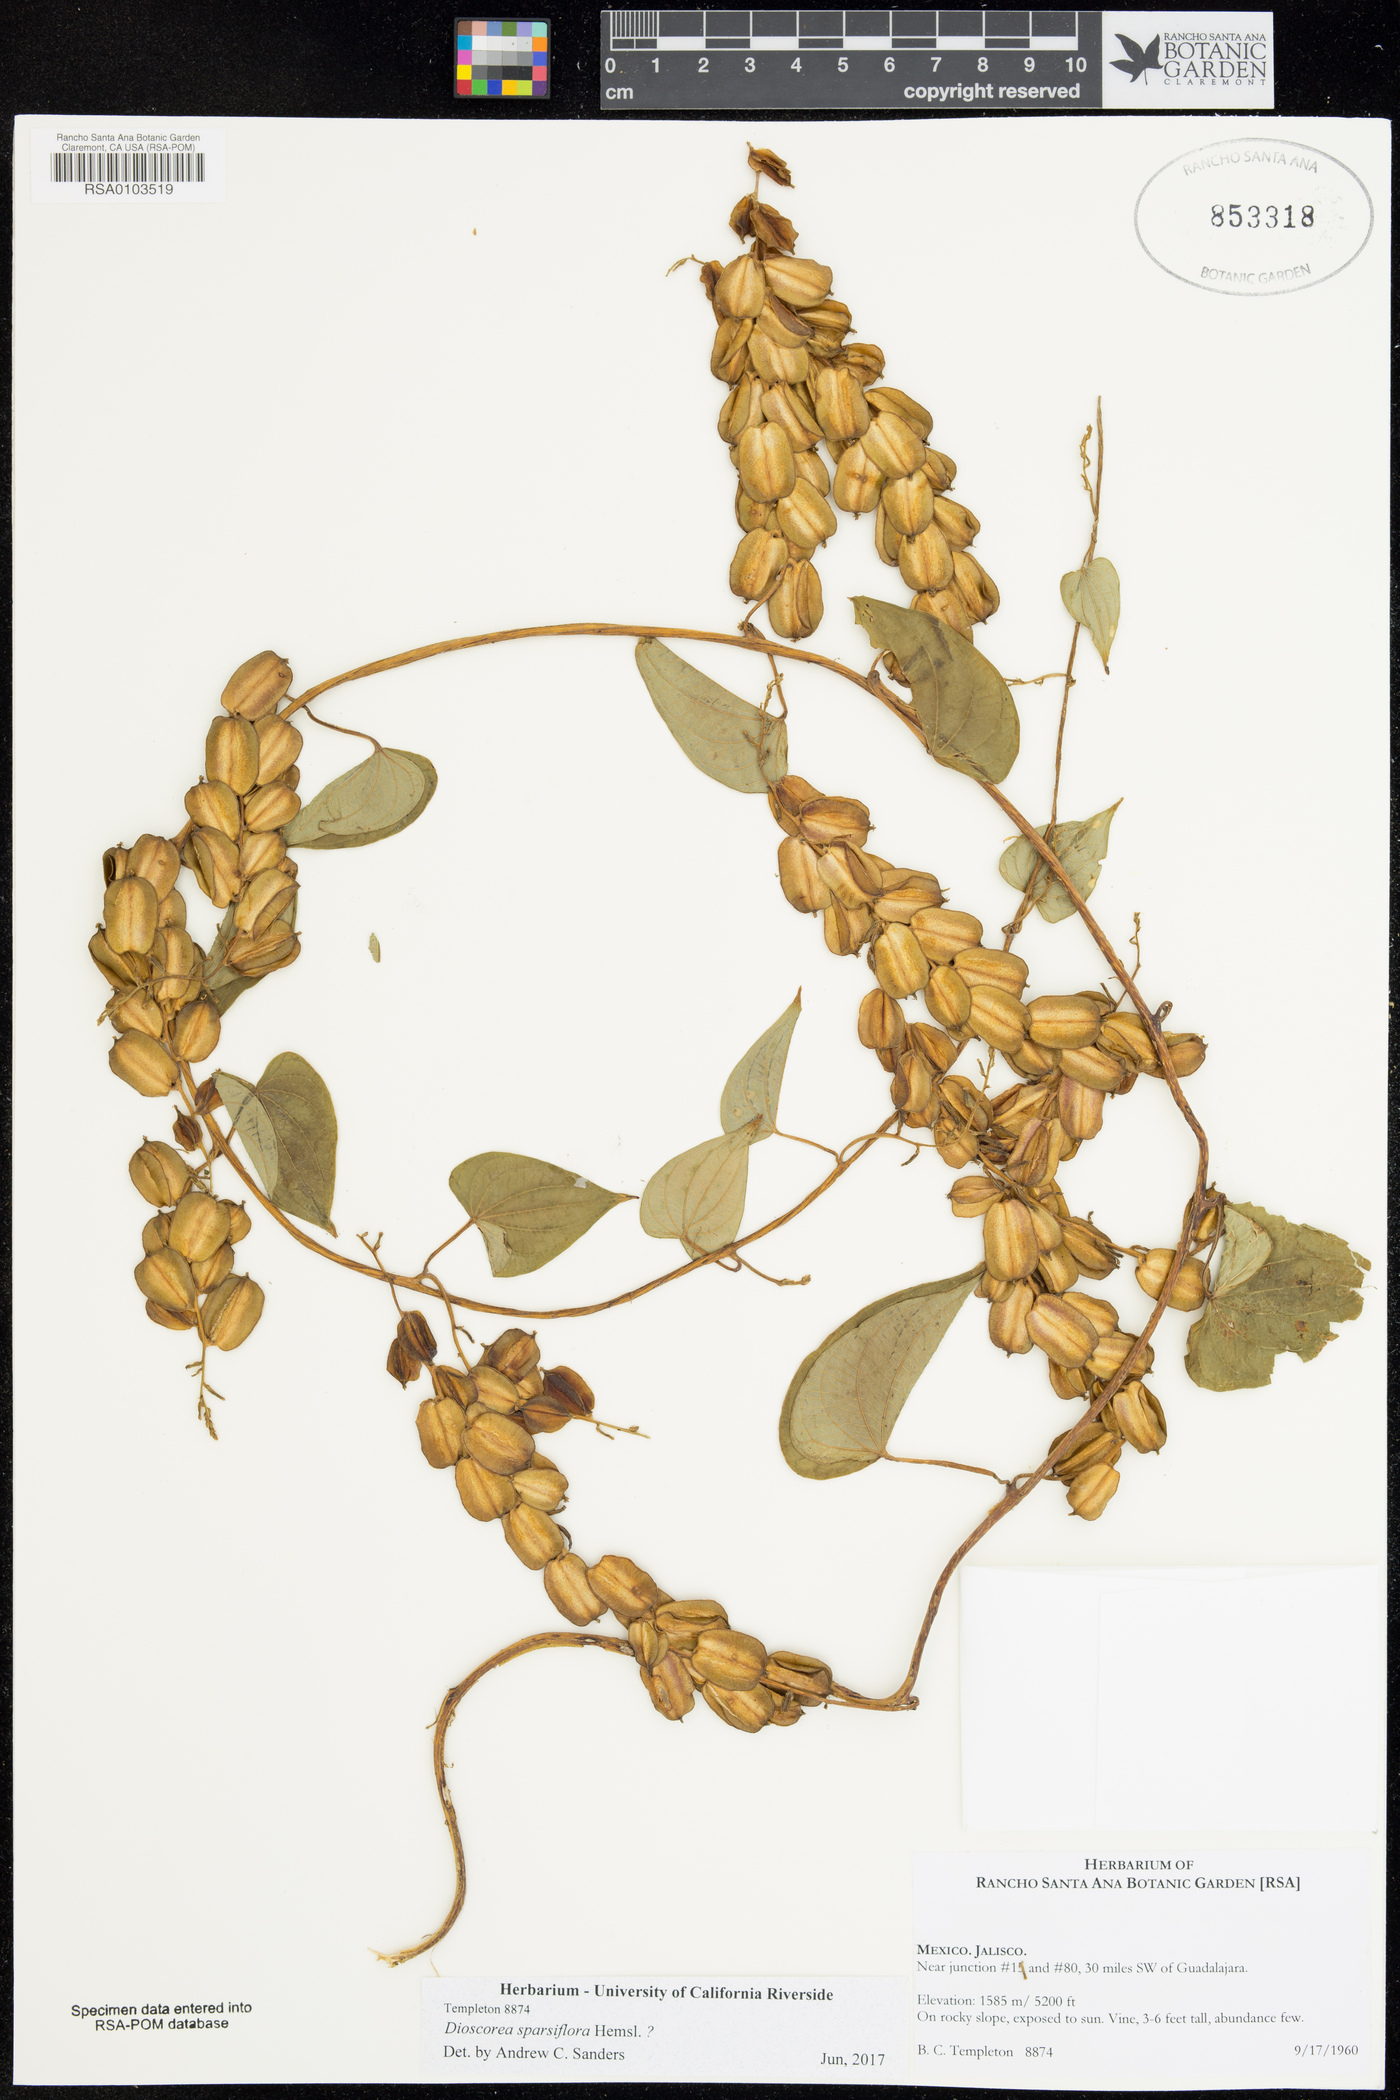 Dioscorea sparsiflora image